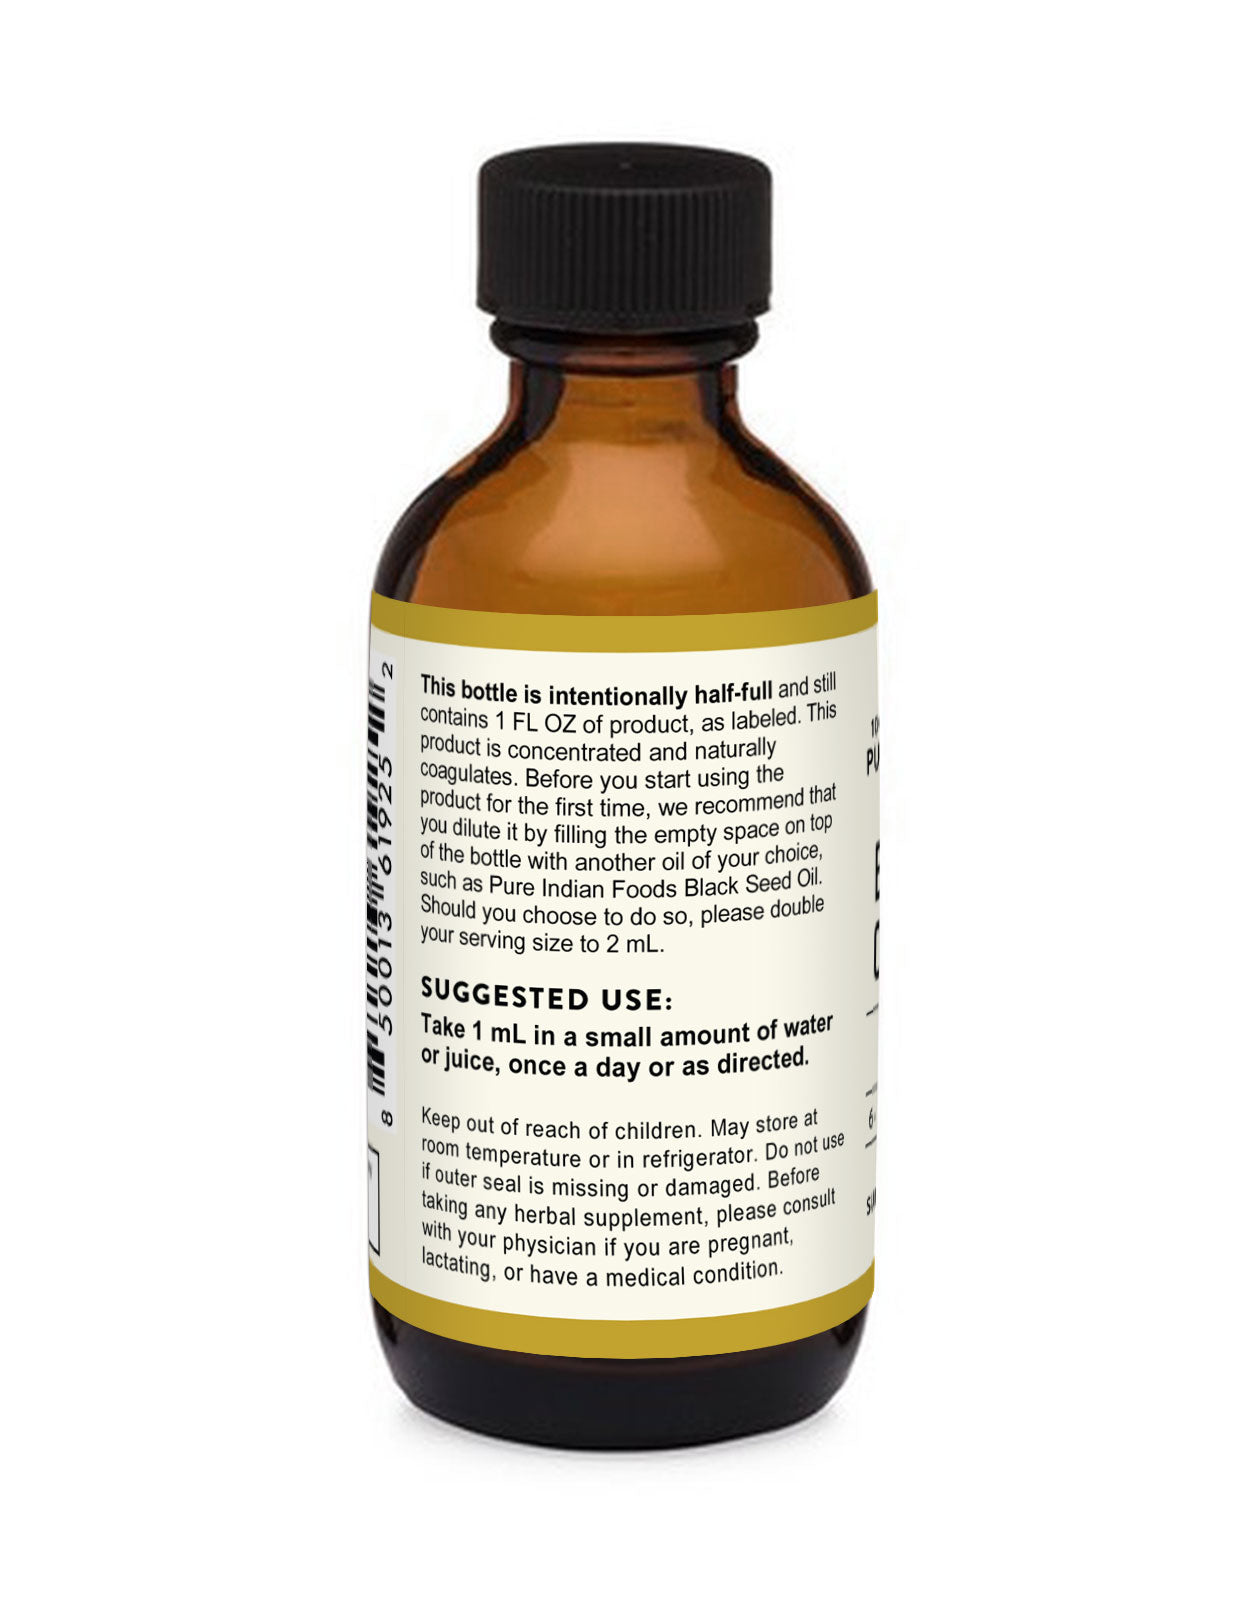 Black Seed Oil Extract (6-7% Thymoquinone) - 1 fl oz (30 mL)